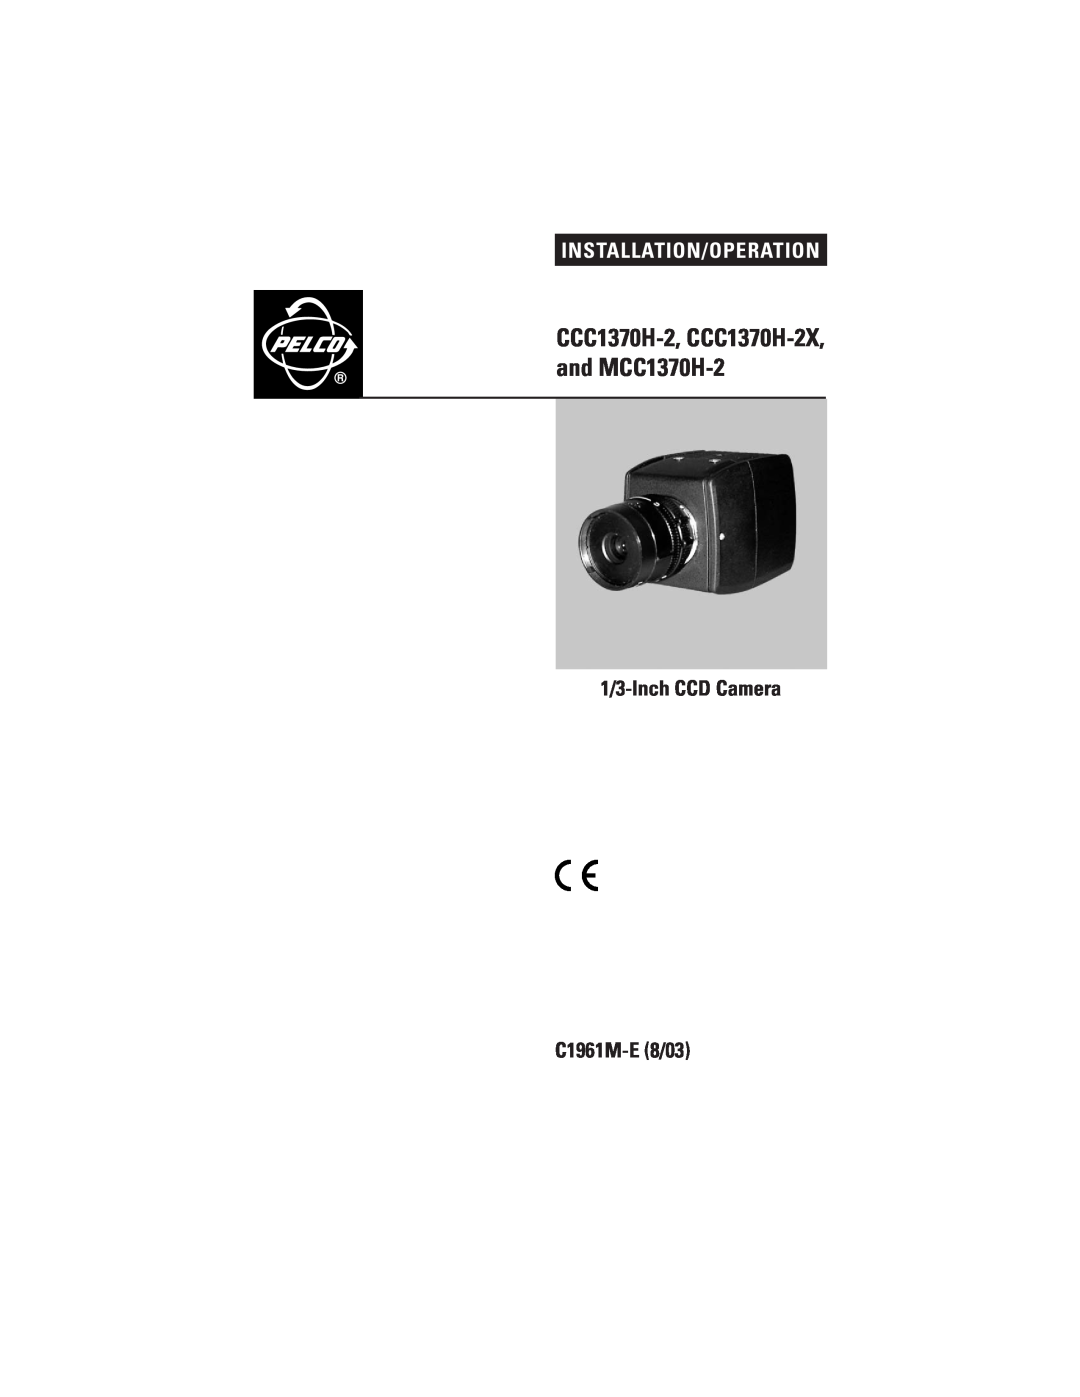 Pelco manual Installation/Operation, CCC1370H-2, CCC1370H-2X, and MCC1370H-2, 1/3-InchCCD Camera C1961M-E8/03 